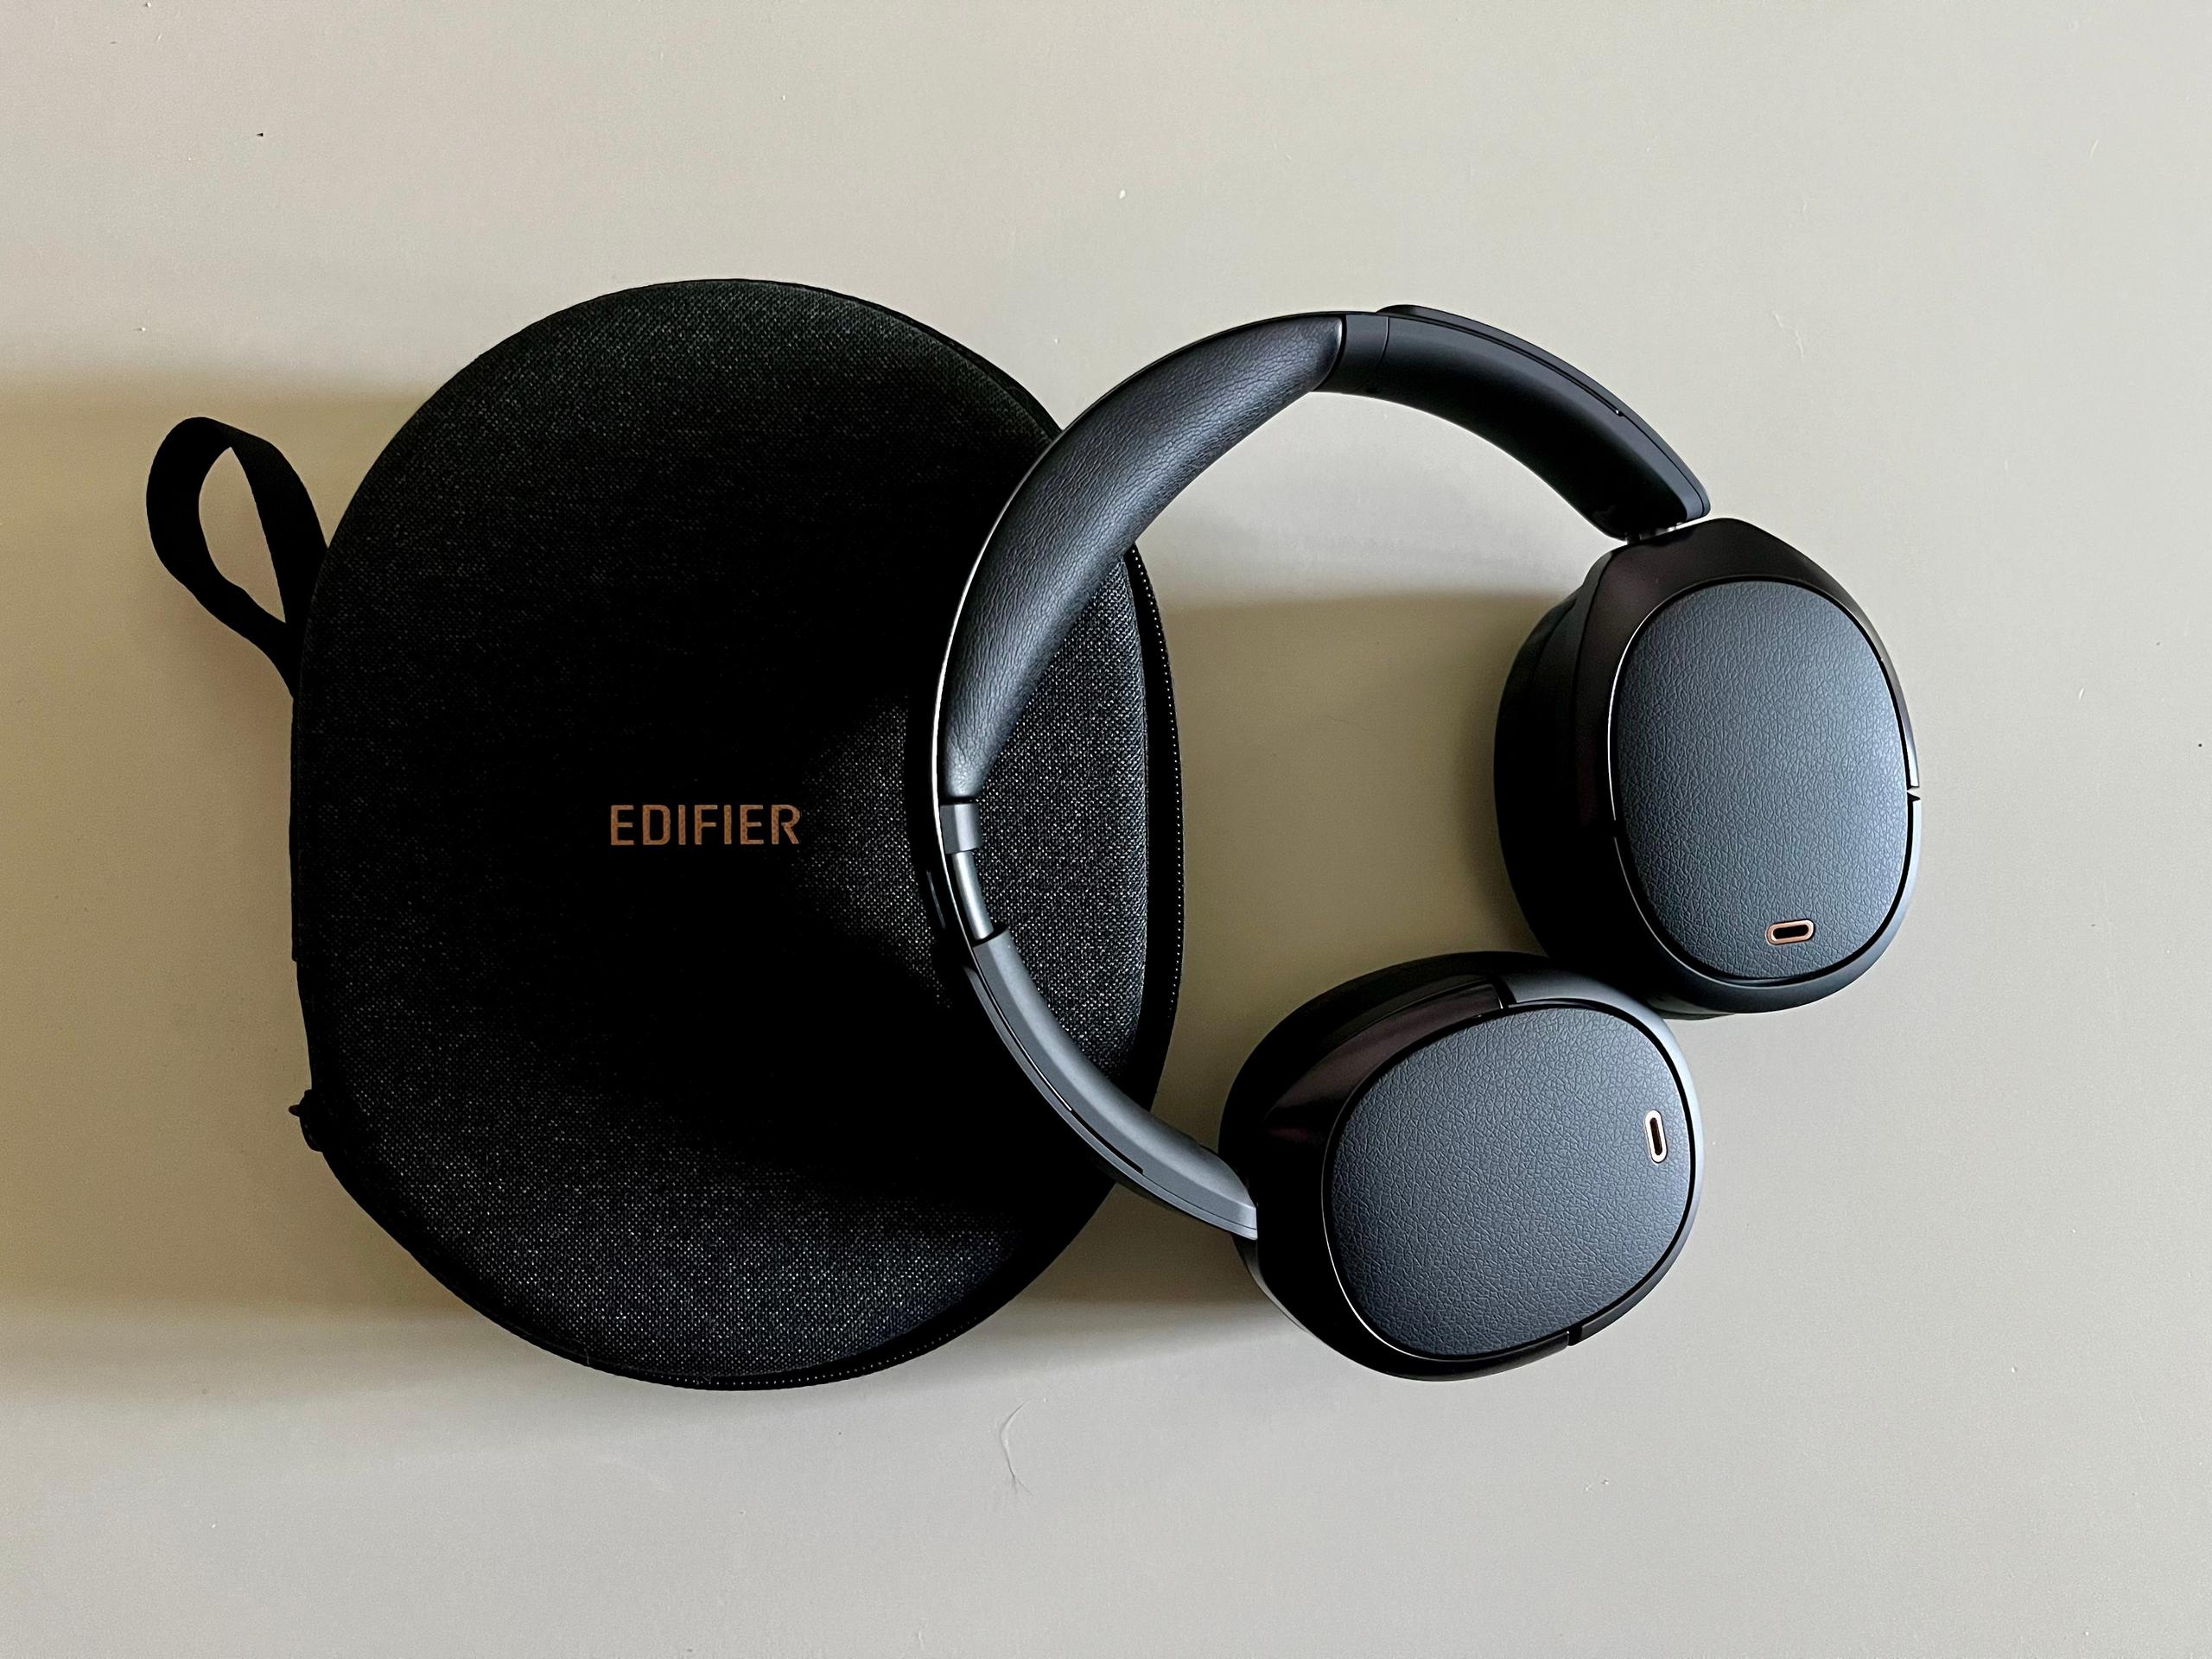 Edifier WH950NB headphones review: Great headphones at a reasonable price